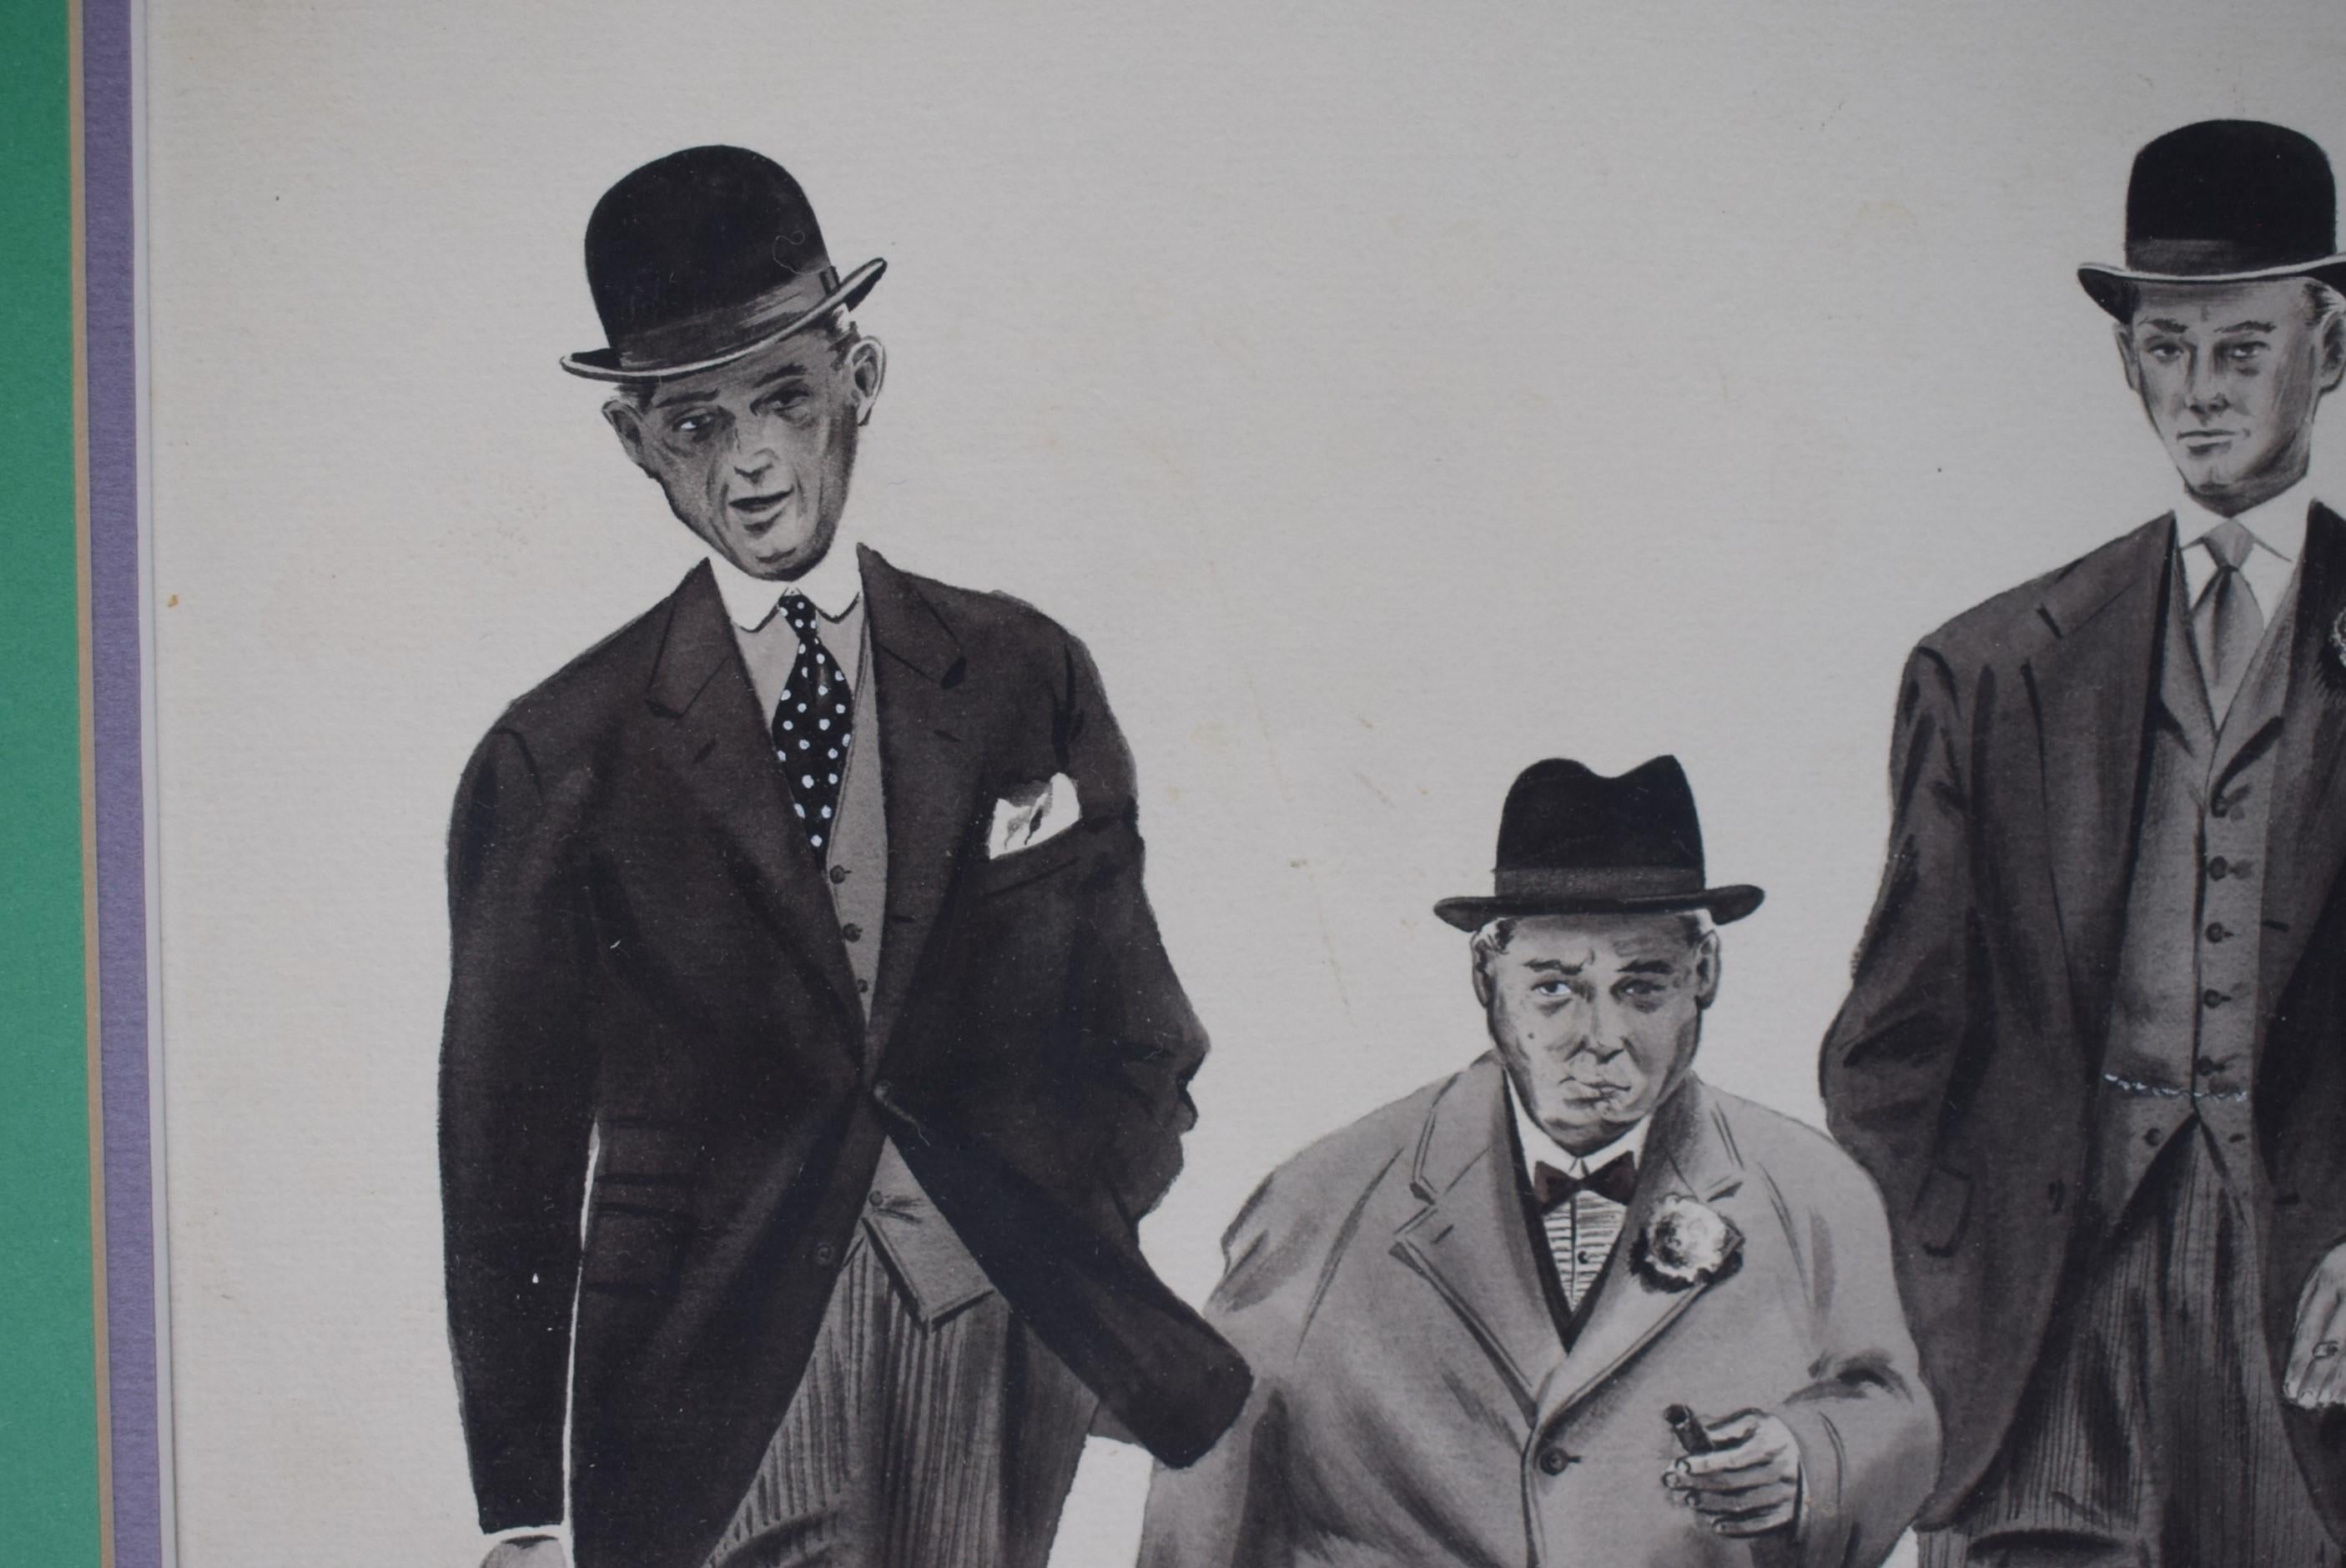 Classic pen & ink depicting three nattily attired London gents c1930s

Art Sz: 13